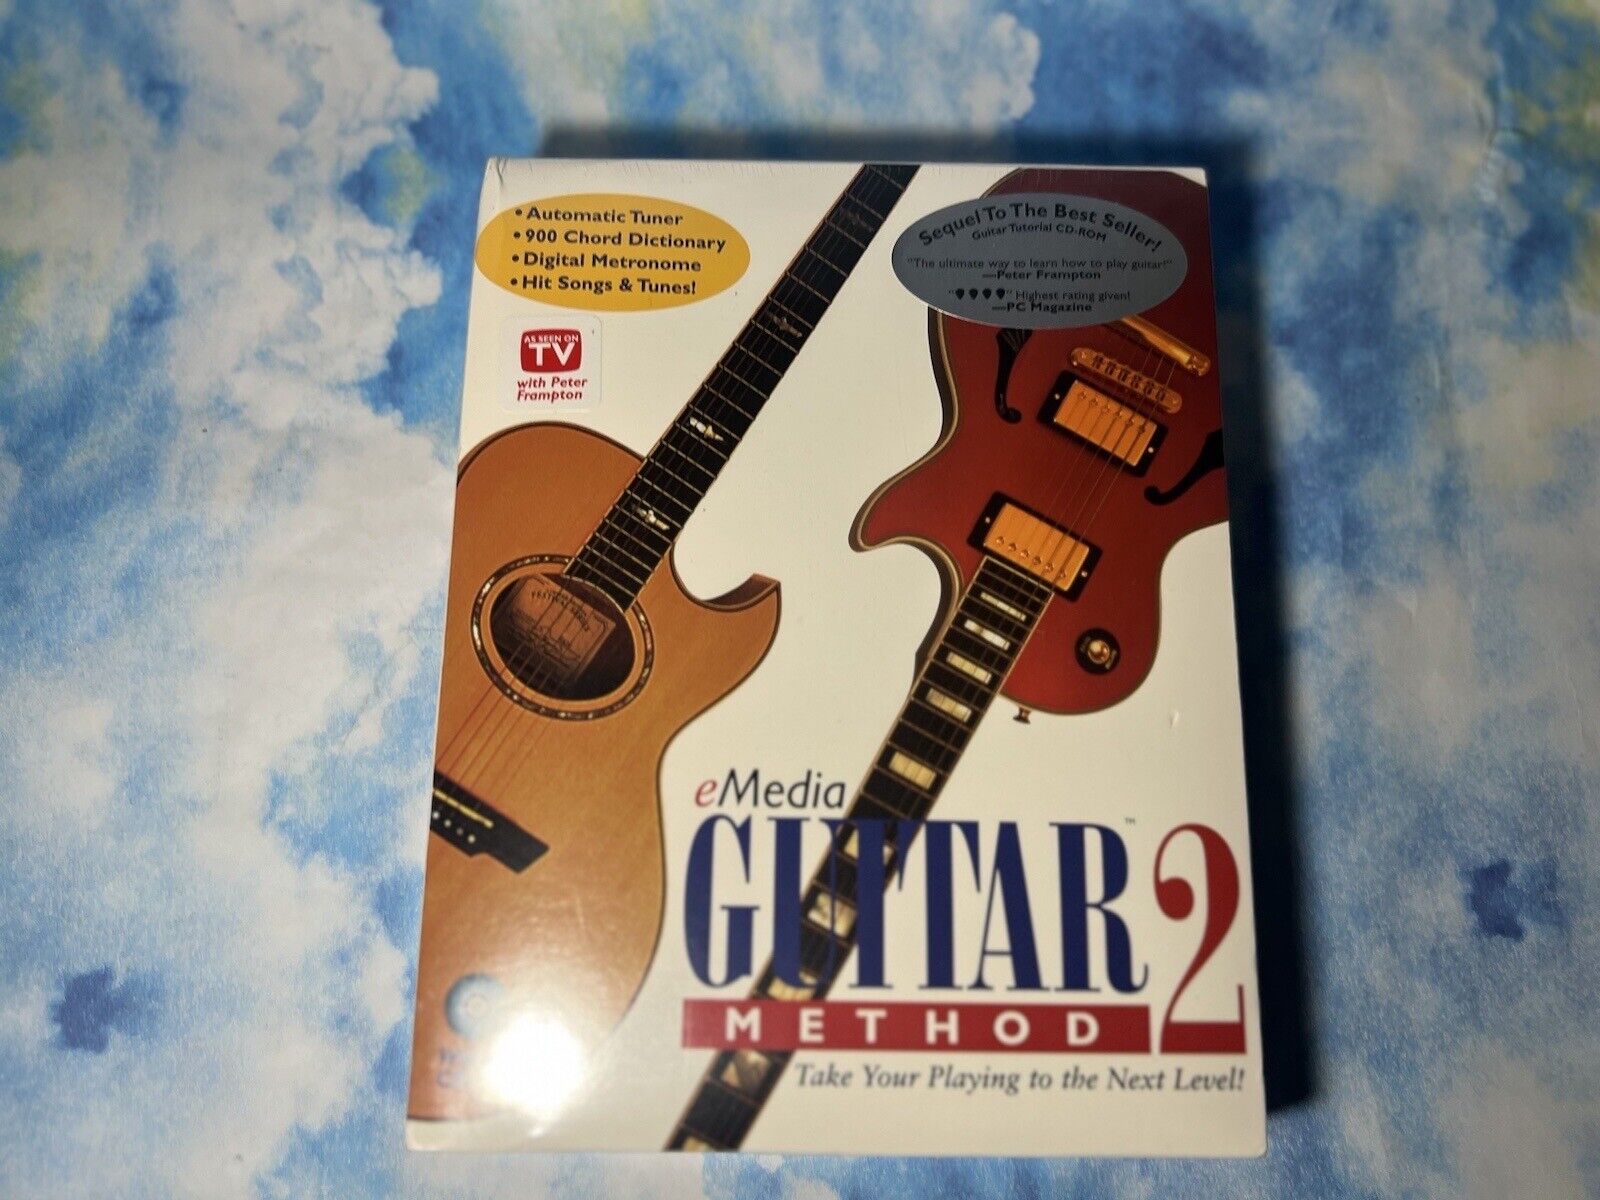 New EMedia Guitar Method 1 CDROM Software 1996 comes w/ CD